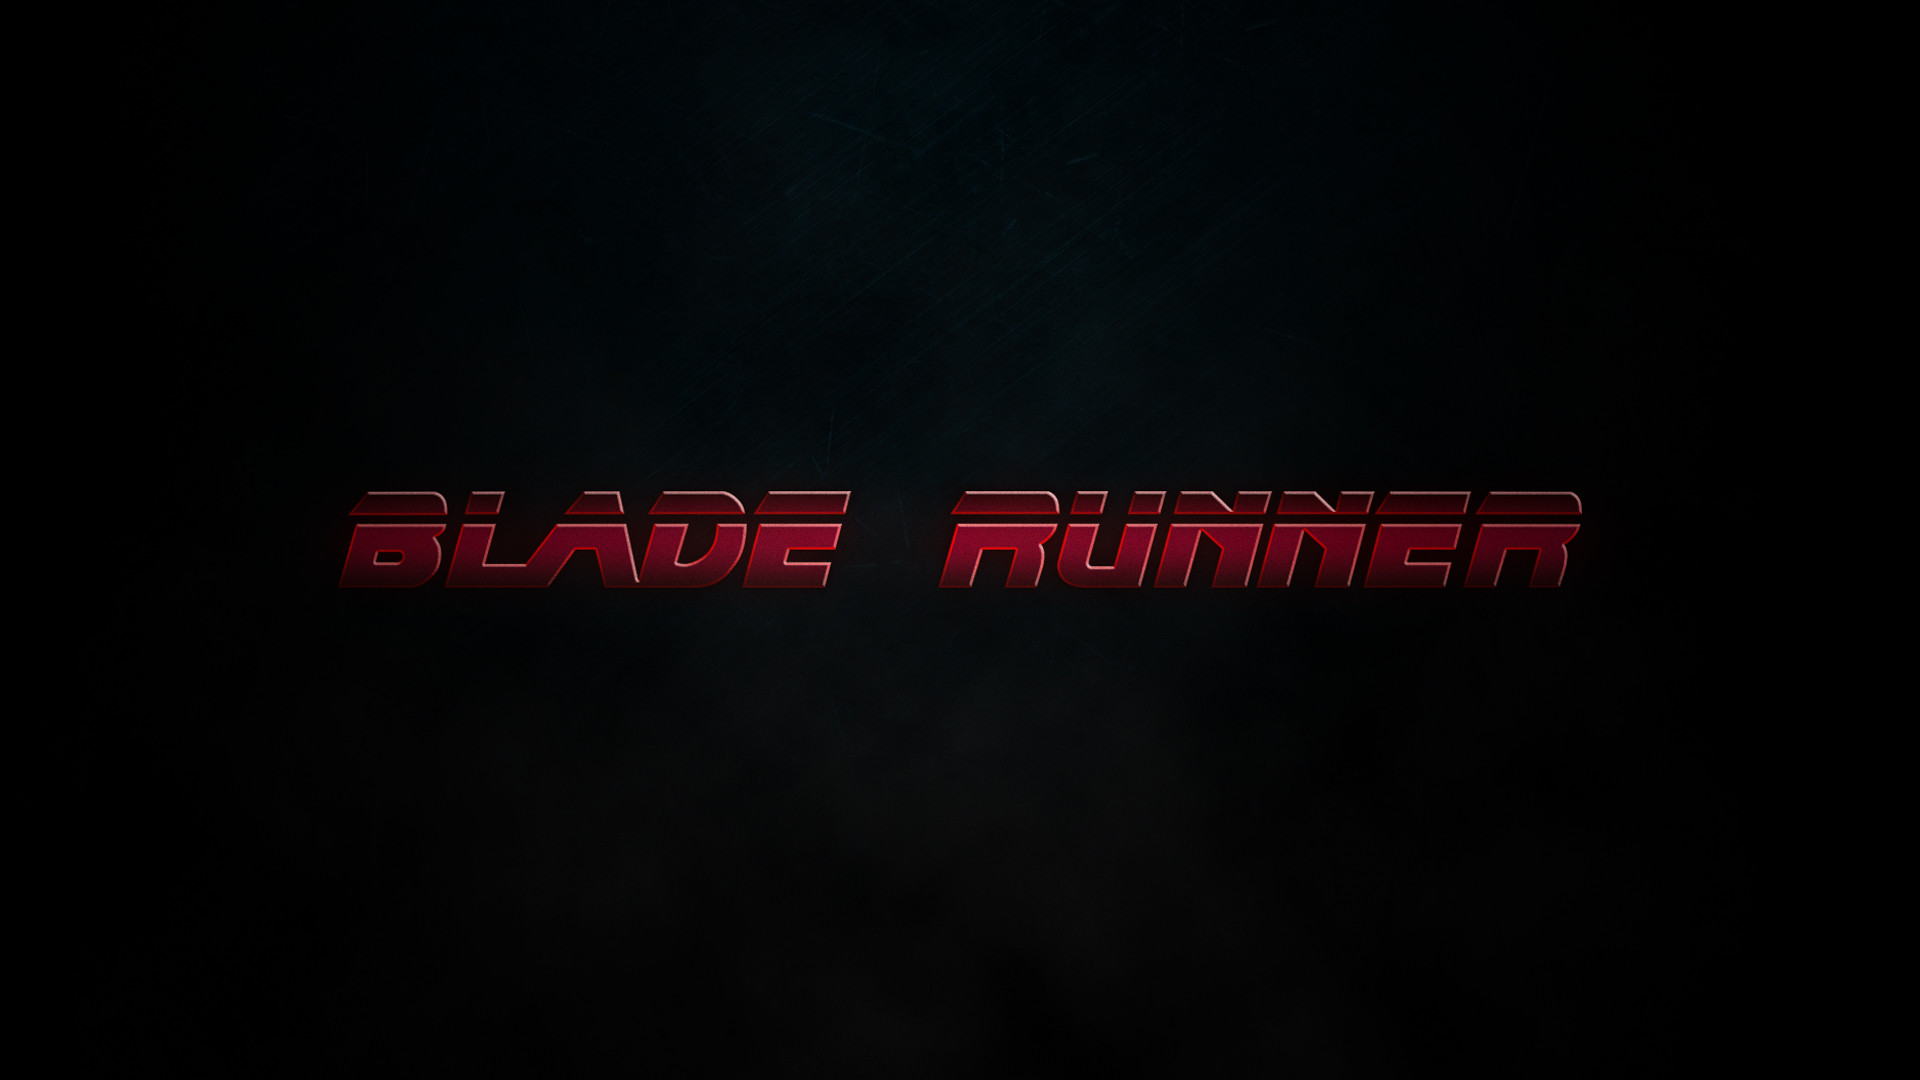 1920x1080 Blade Runner 2049 Wallpaper by TRiGGER80 Blade Runner 2049 Wallpaper by  TRiGGER80